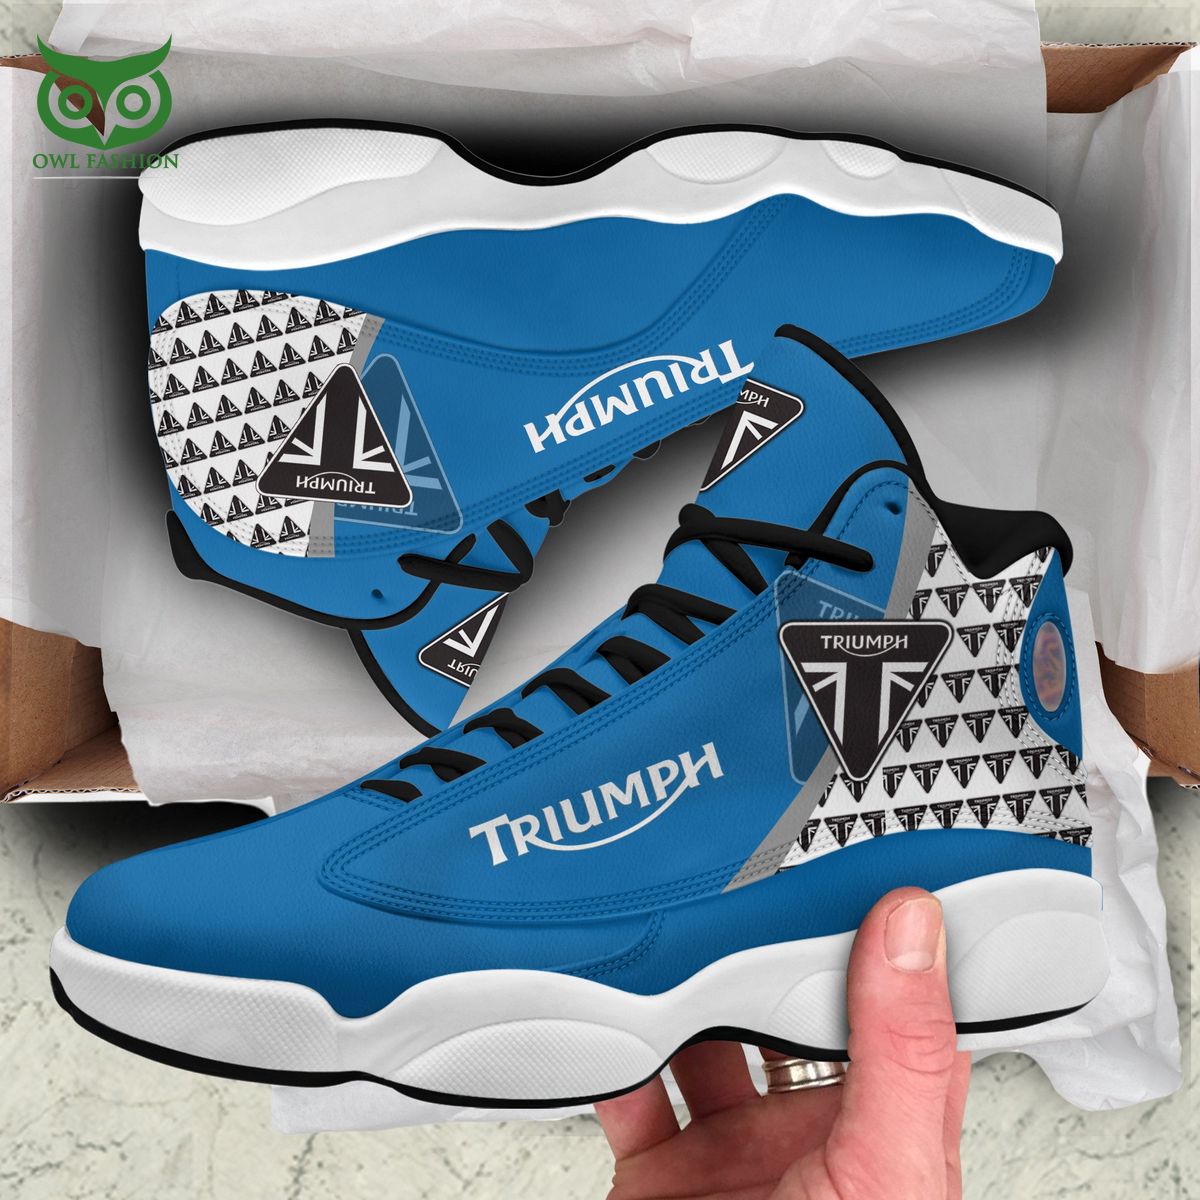 Nfl Buffalo Bills Limited Edition Air Jordan 13 For Fans Sneakers